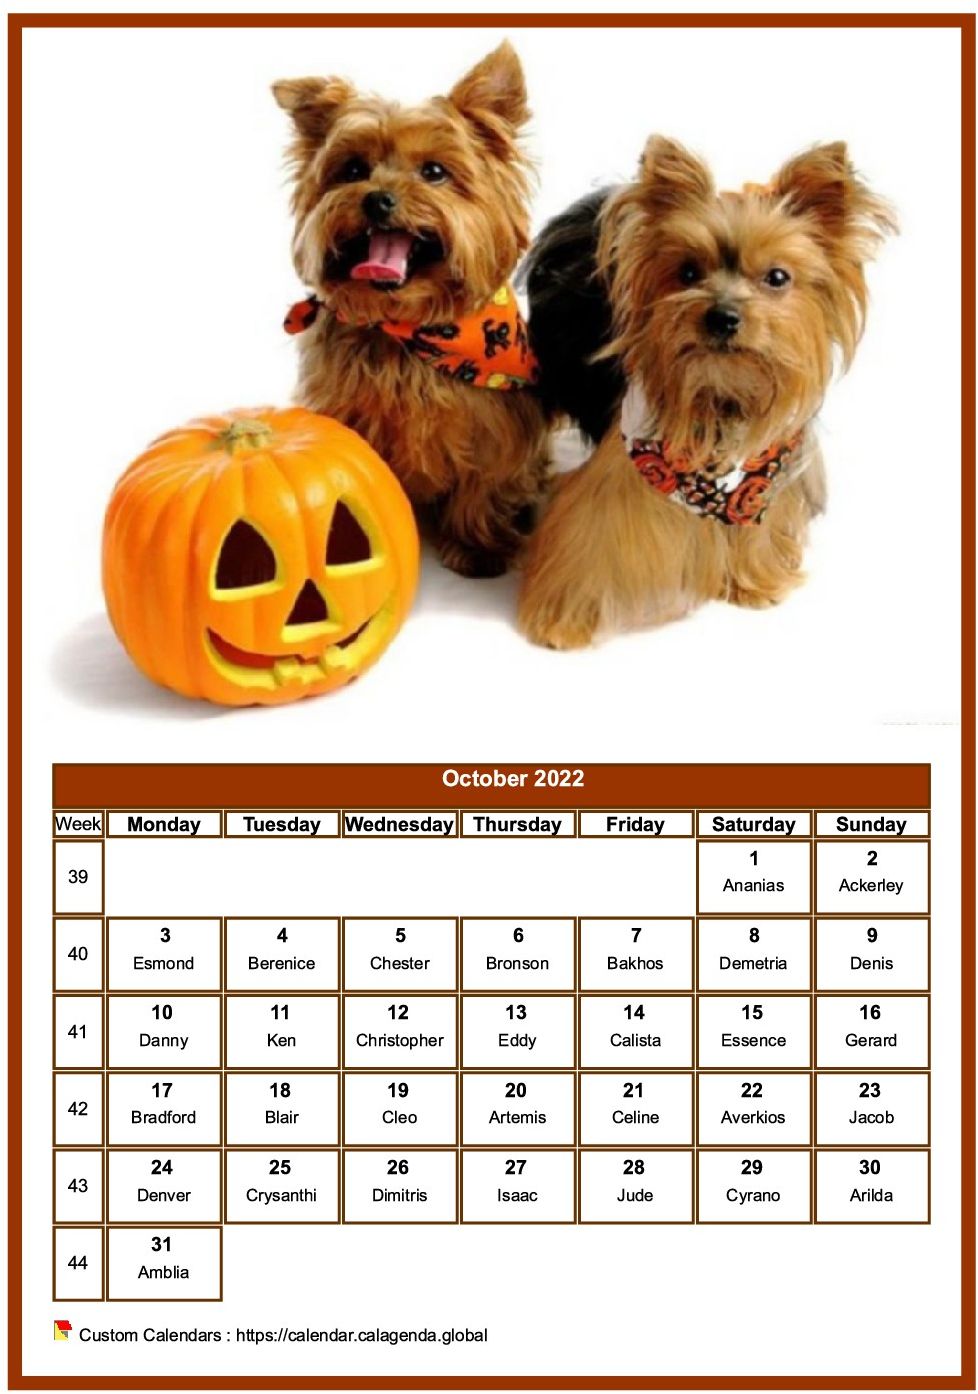 Calendar October 2022 dogs